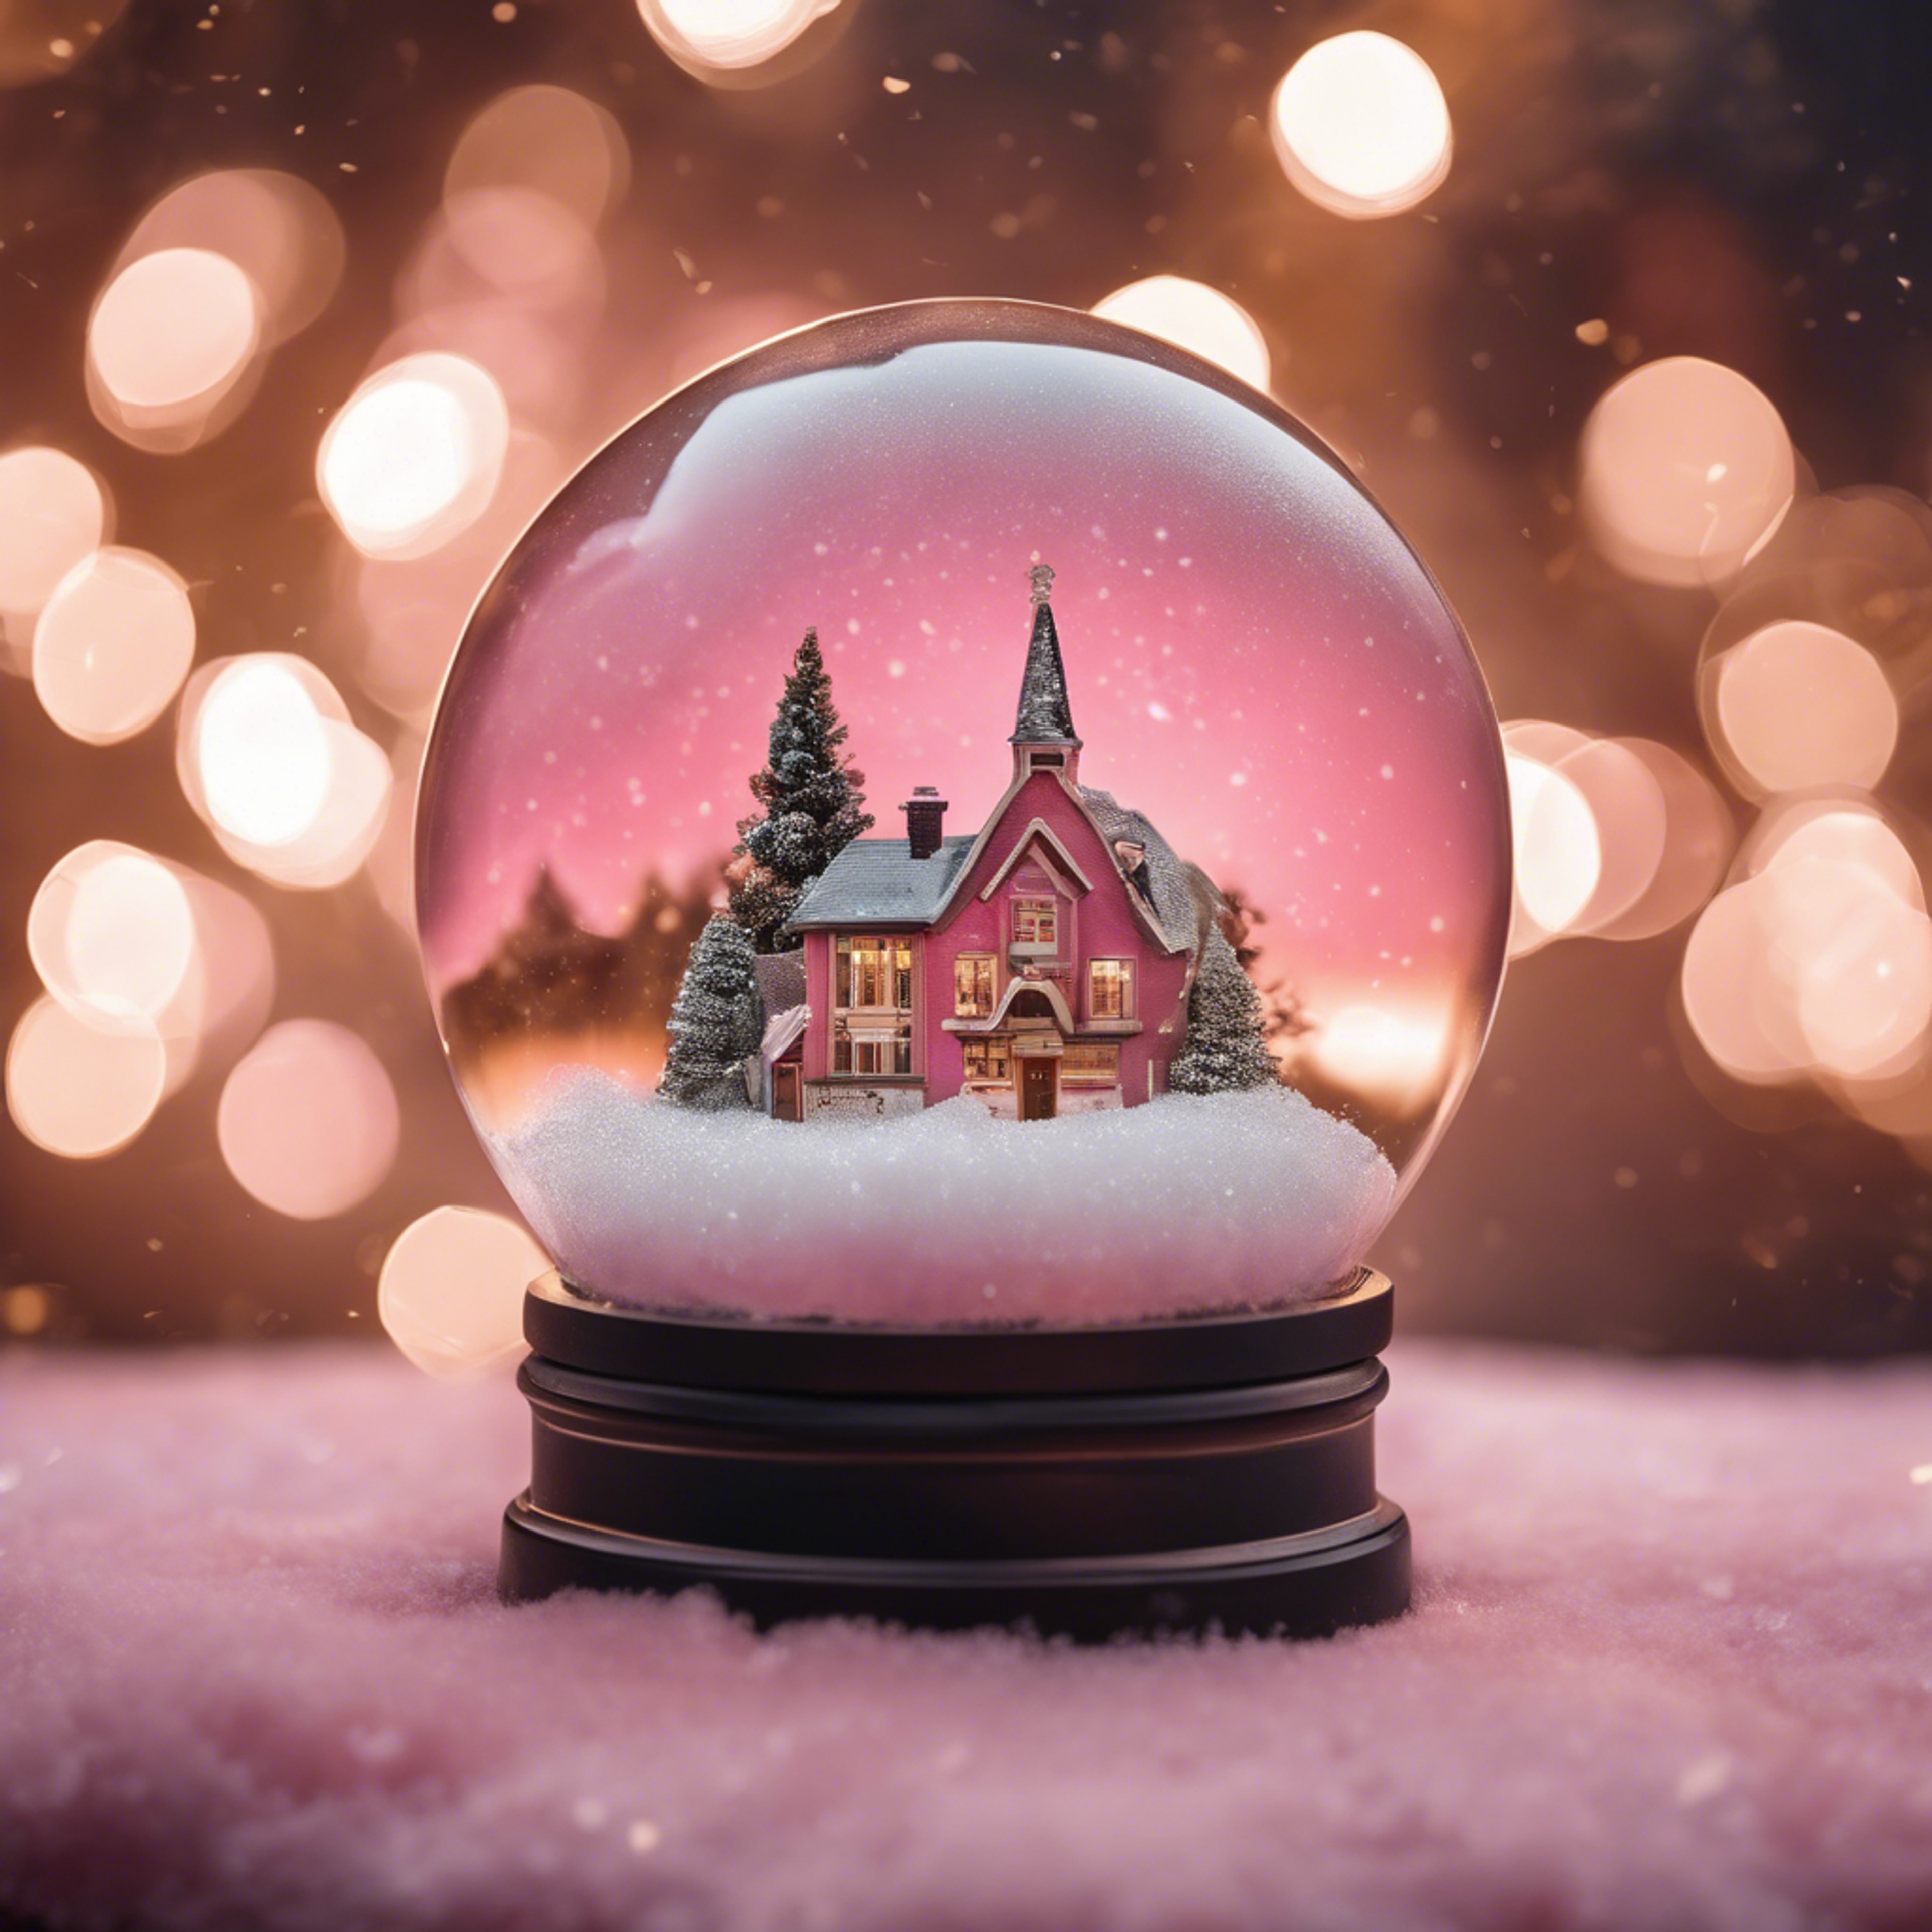 An enchanting snow globe revealing a quaint town under a pink Christmas sky. ផ្ទាំង​រូបភាព[a24ac541fe61415897f7]